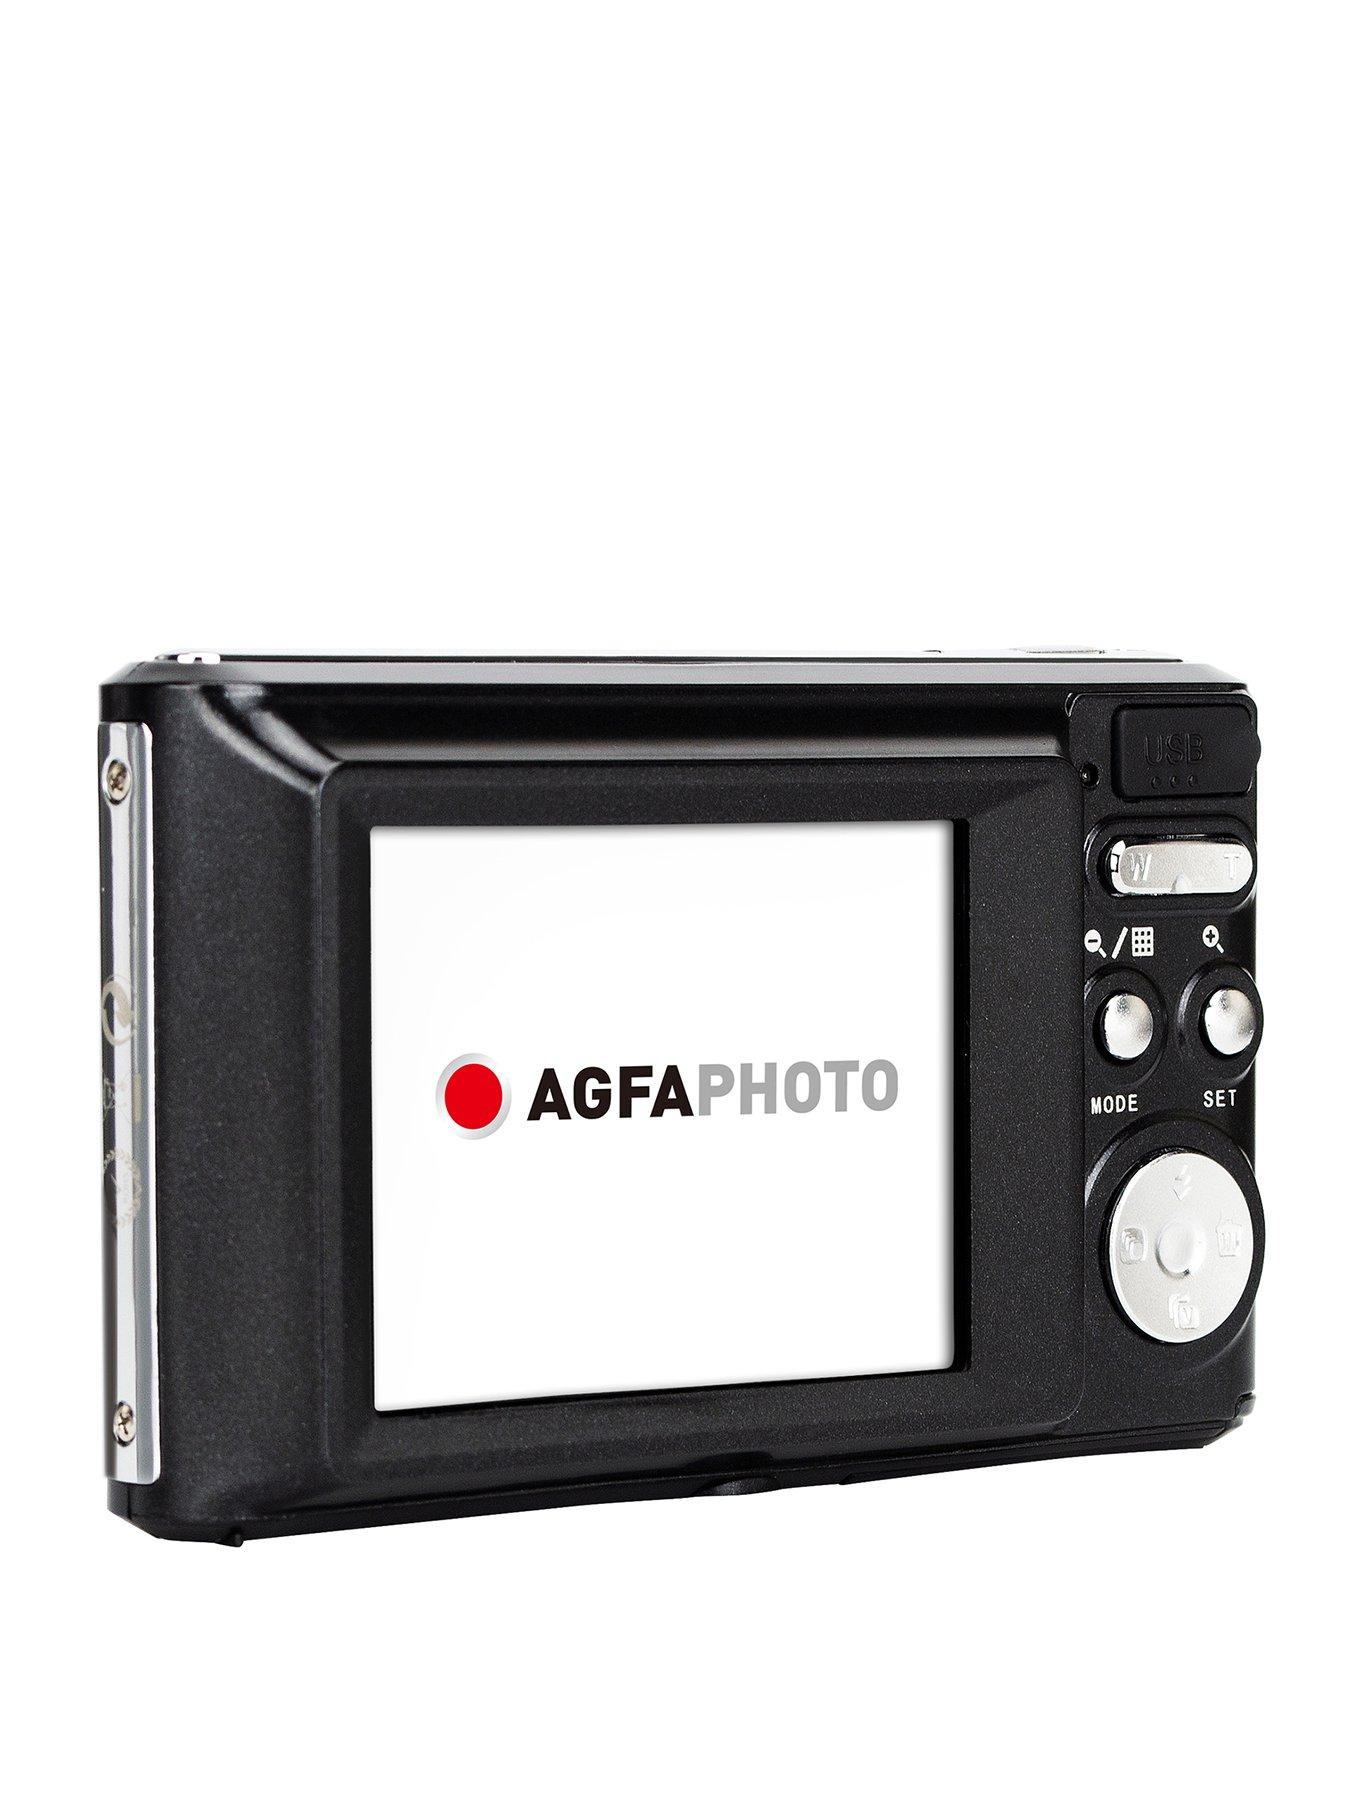 Kodak Agfa Photo Realishot DC5500 Compact Digital Camera - Black